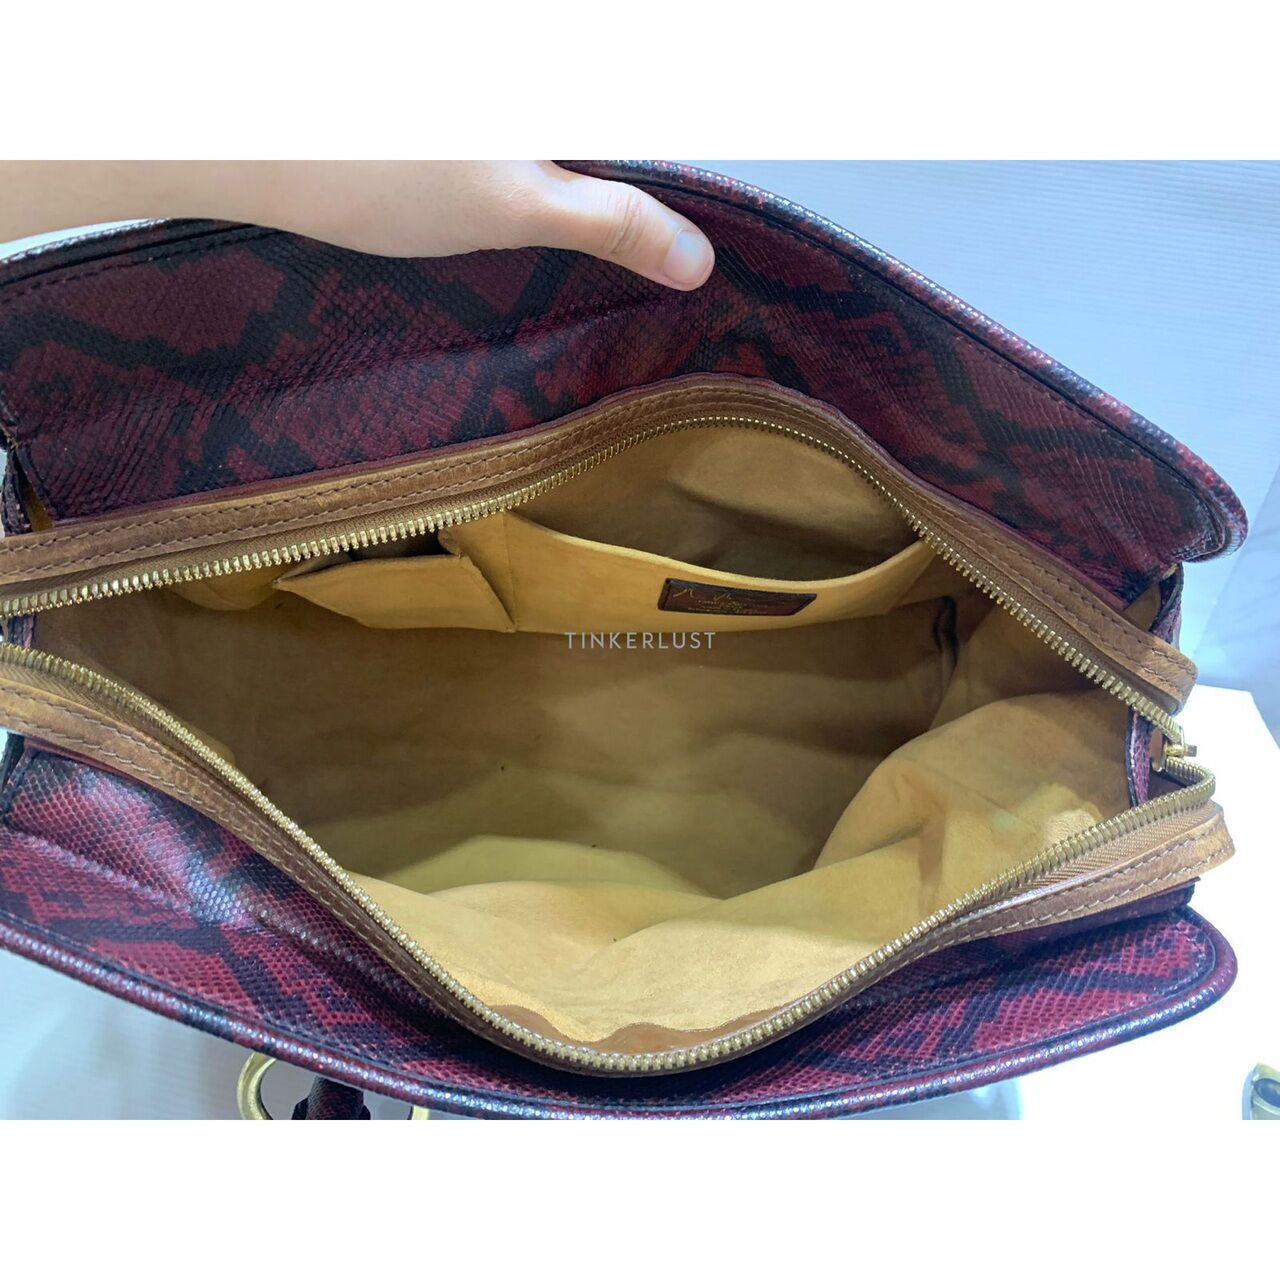 Louis Vuitton Richard Prince Snakeskin Limited Edition 2008 Handbag